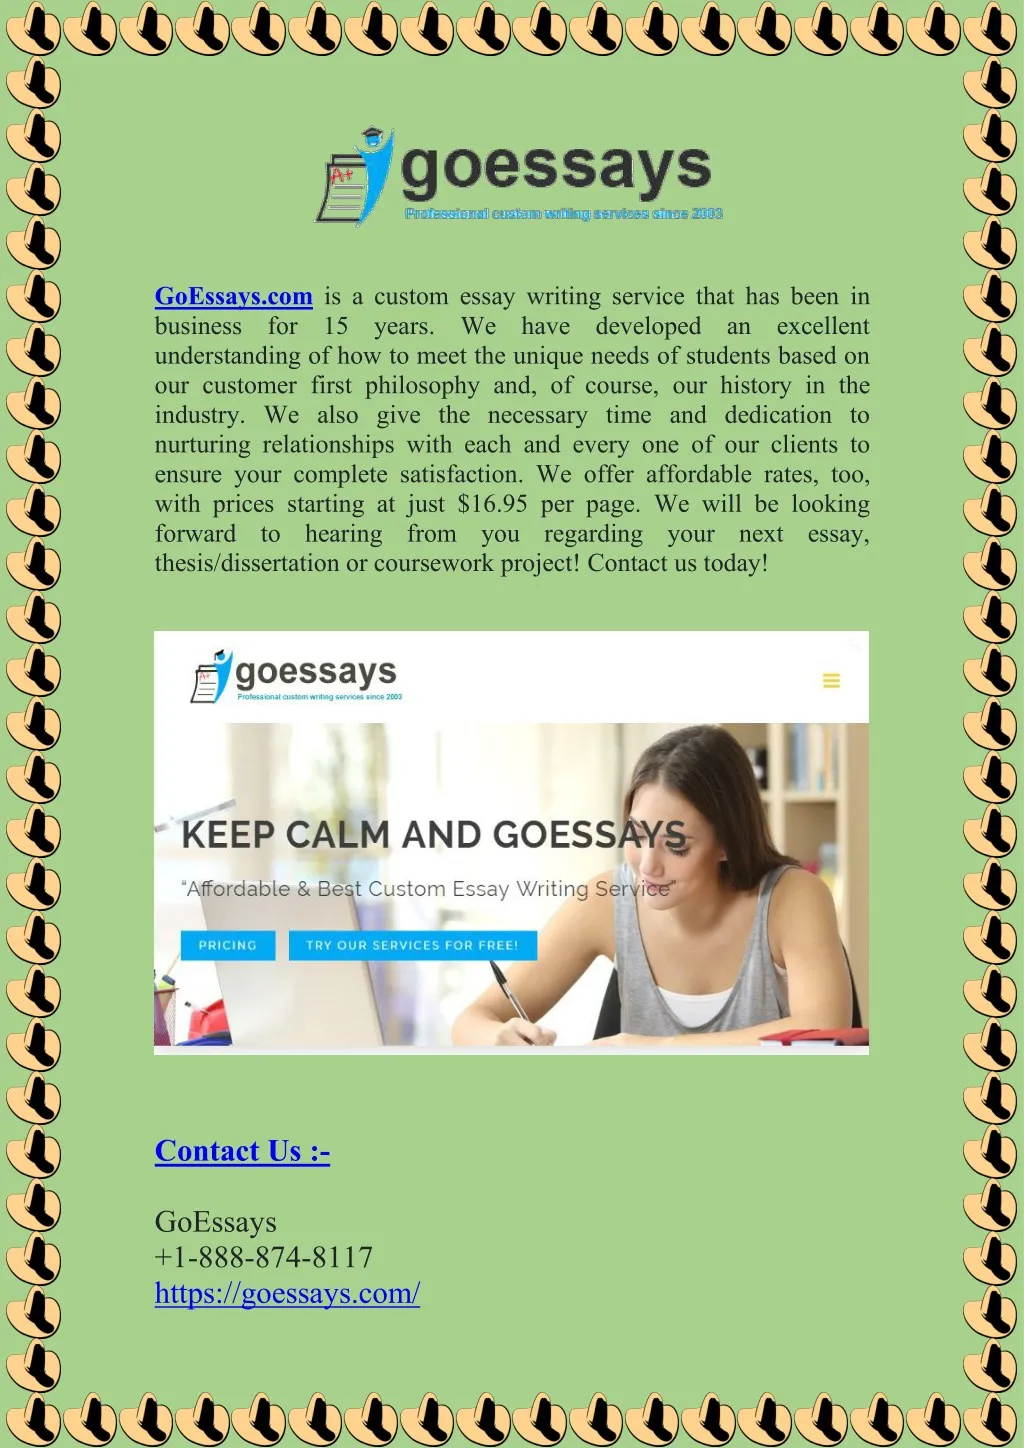 goessays com is a custom essay writing service